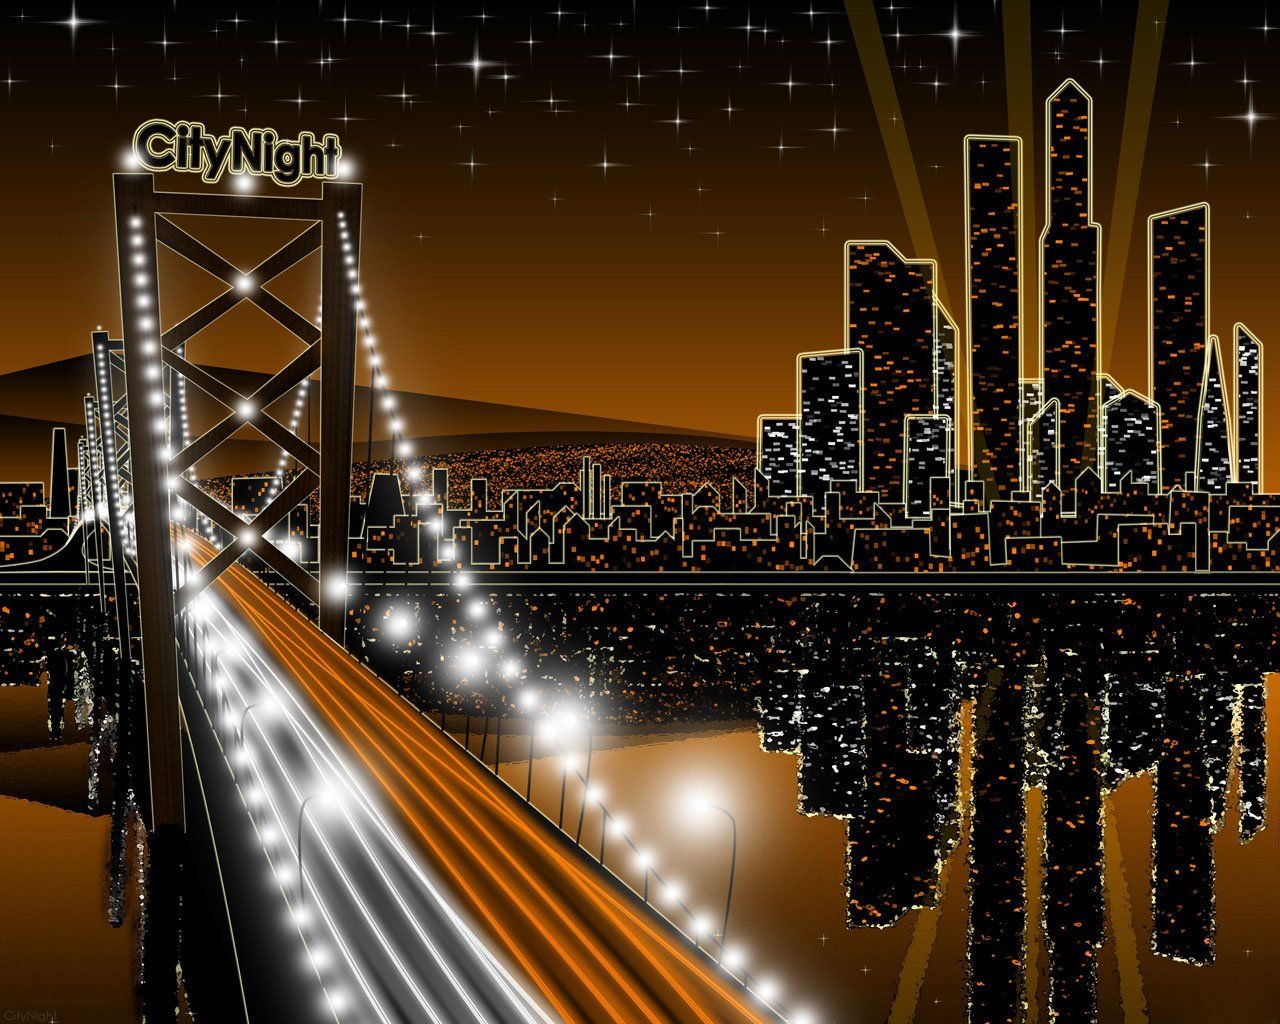 Free download City Night Wallpaper City Night Background City